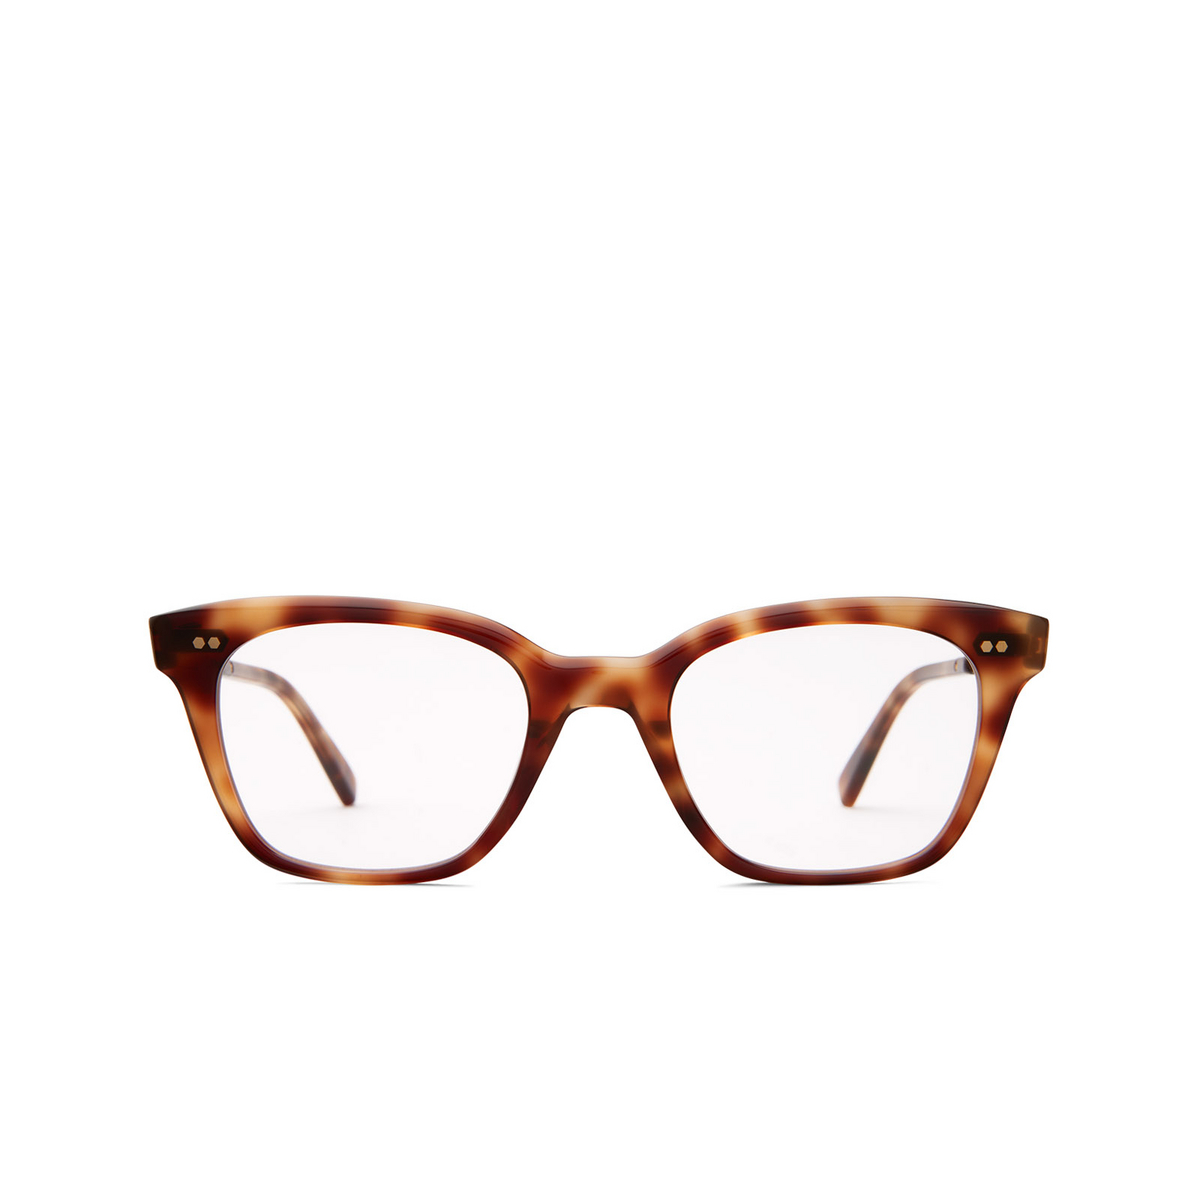 Mr. Leight MORGAN C Eyeglasses CALT-ATG Calico Tortoise-Antique Gold - front view